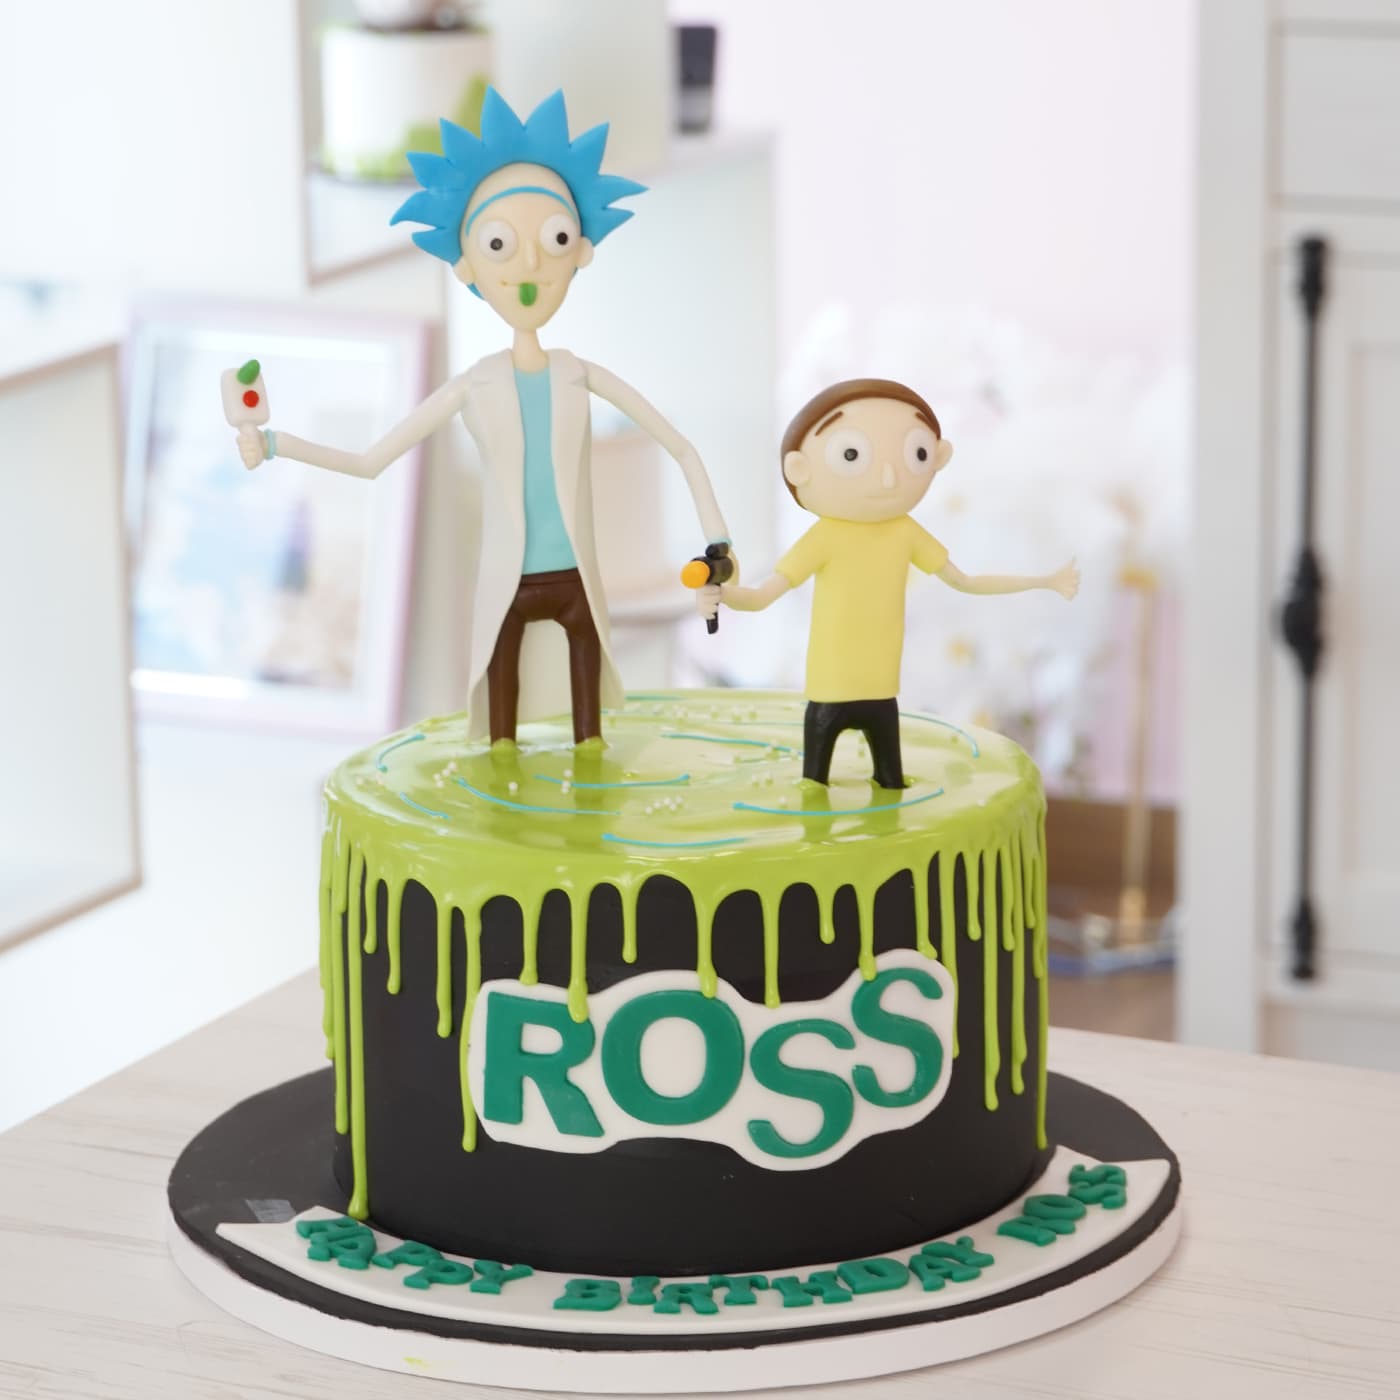 Rick and Morty Cake 2